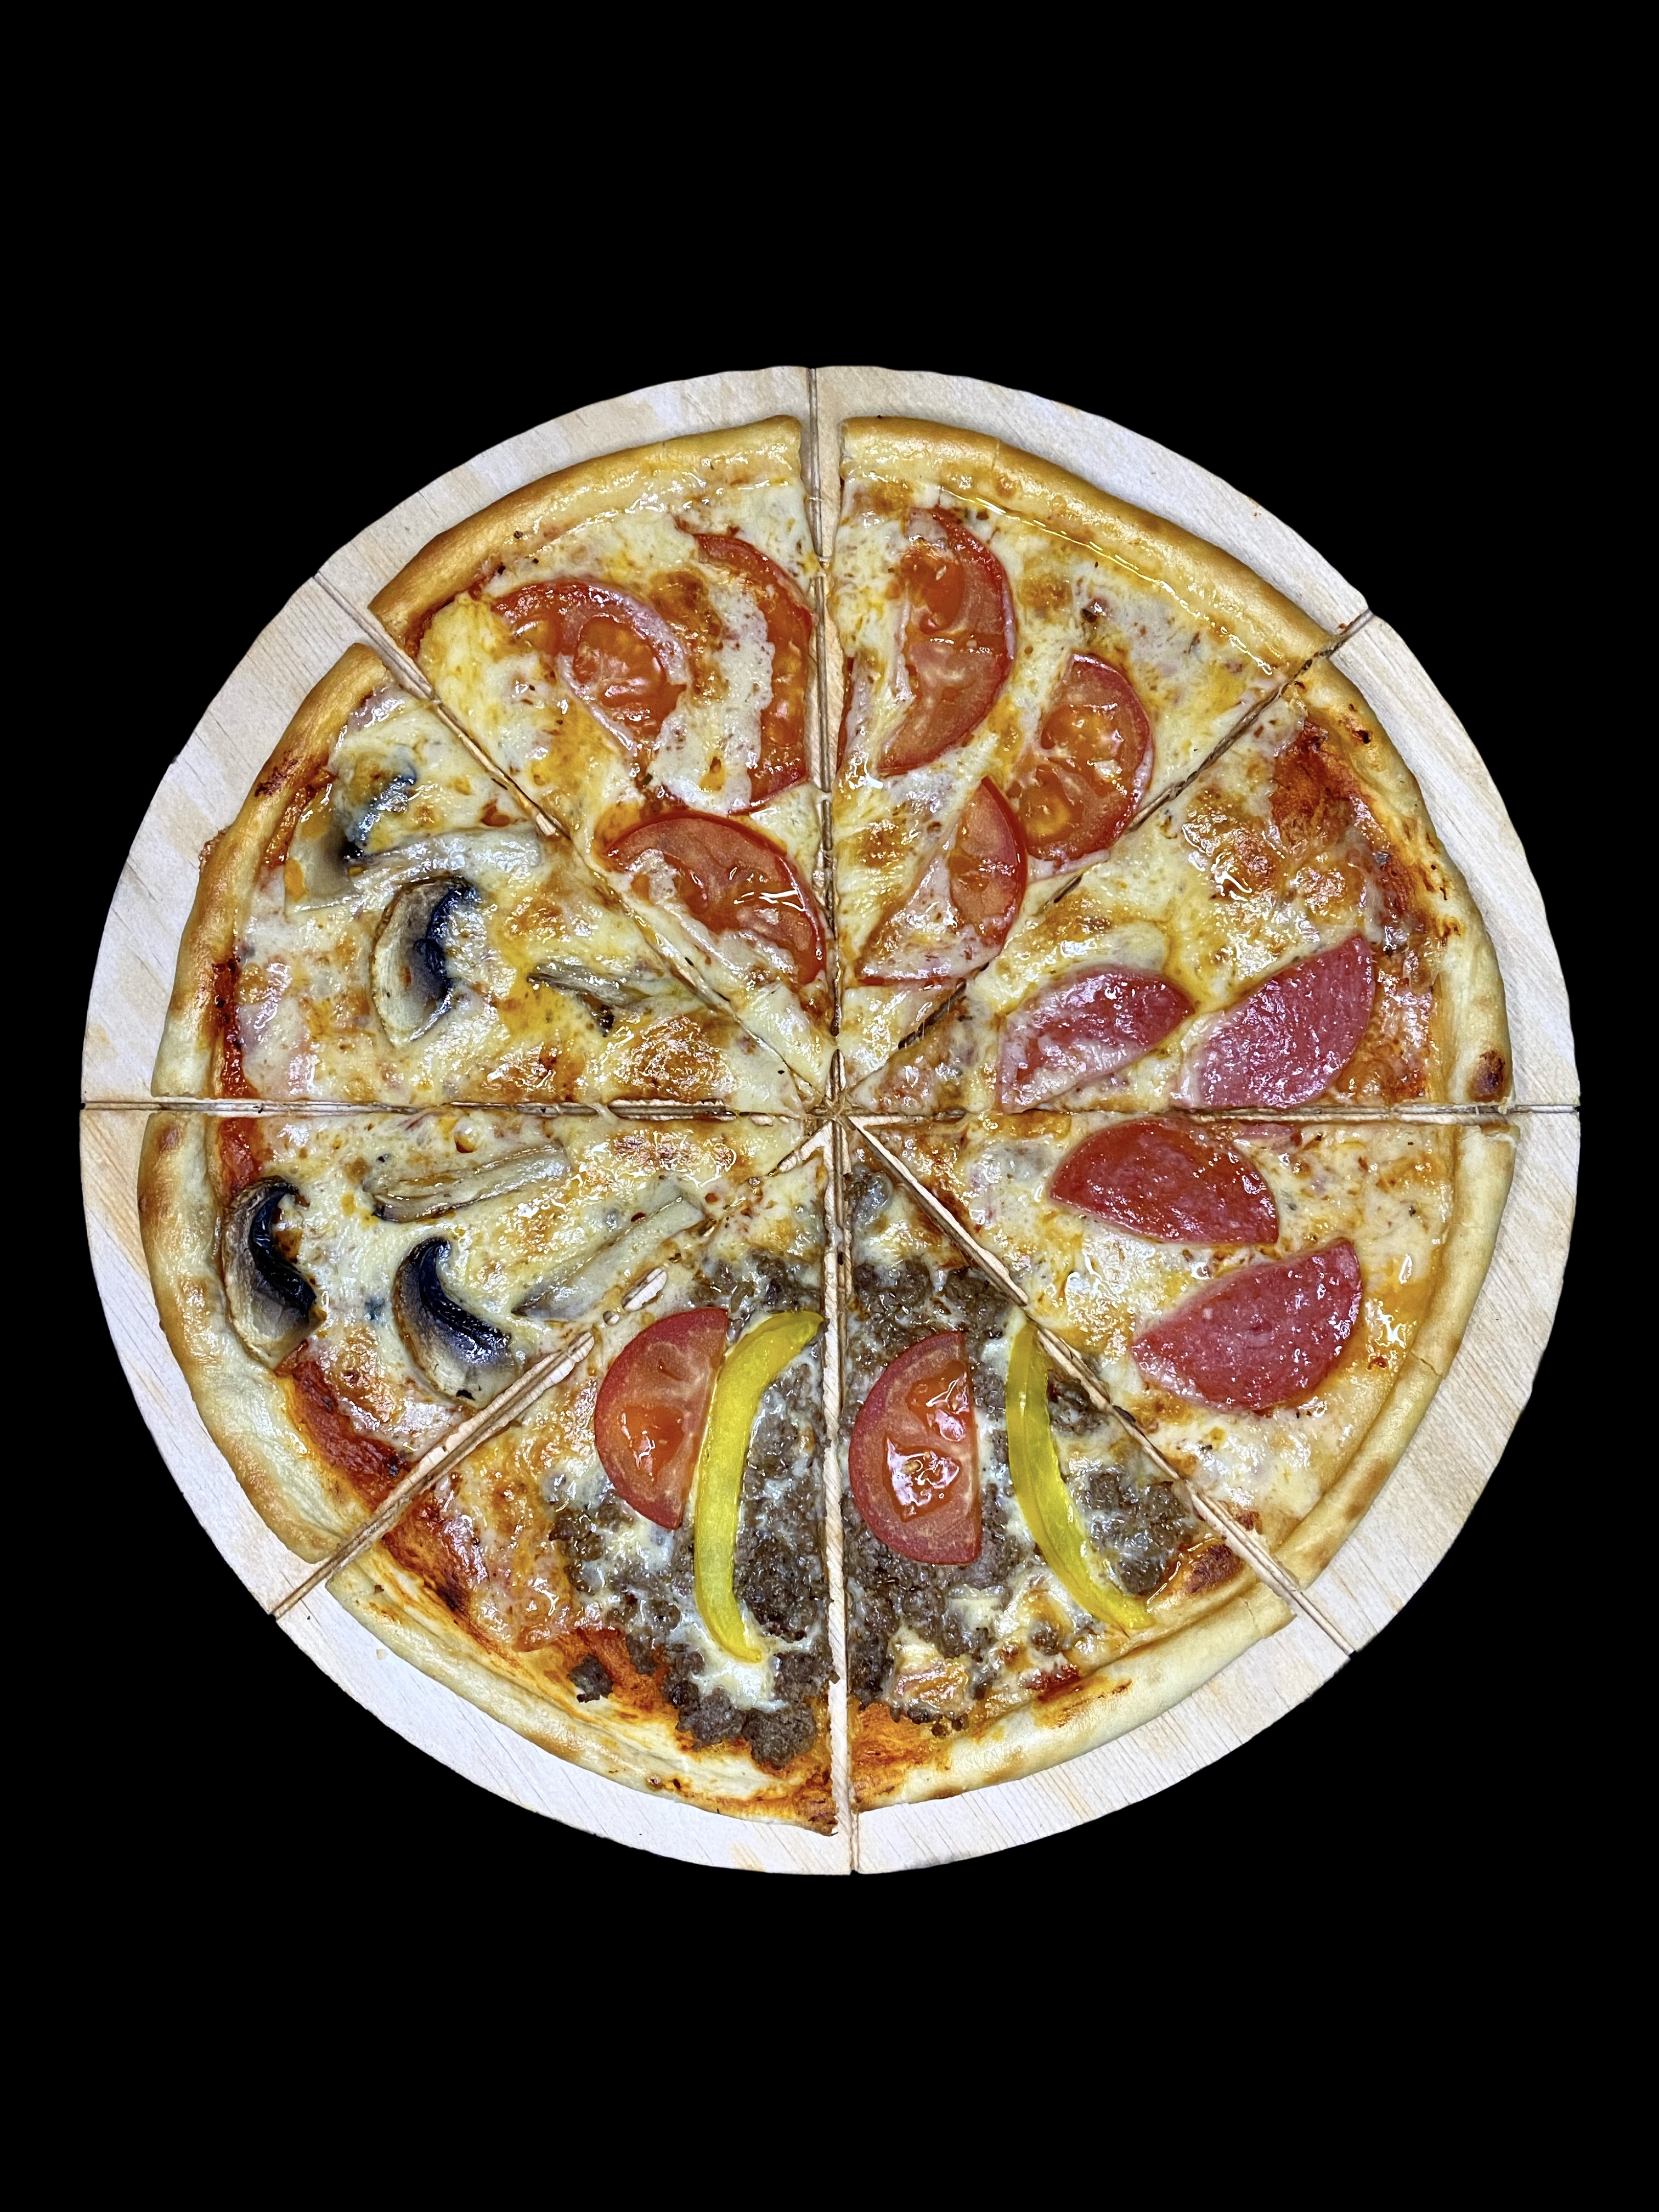 пицца четыре сезона рецепт с фото пошагово фото 111